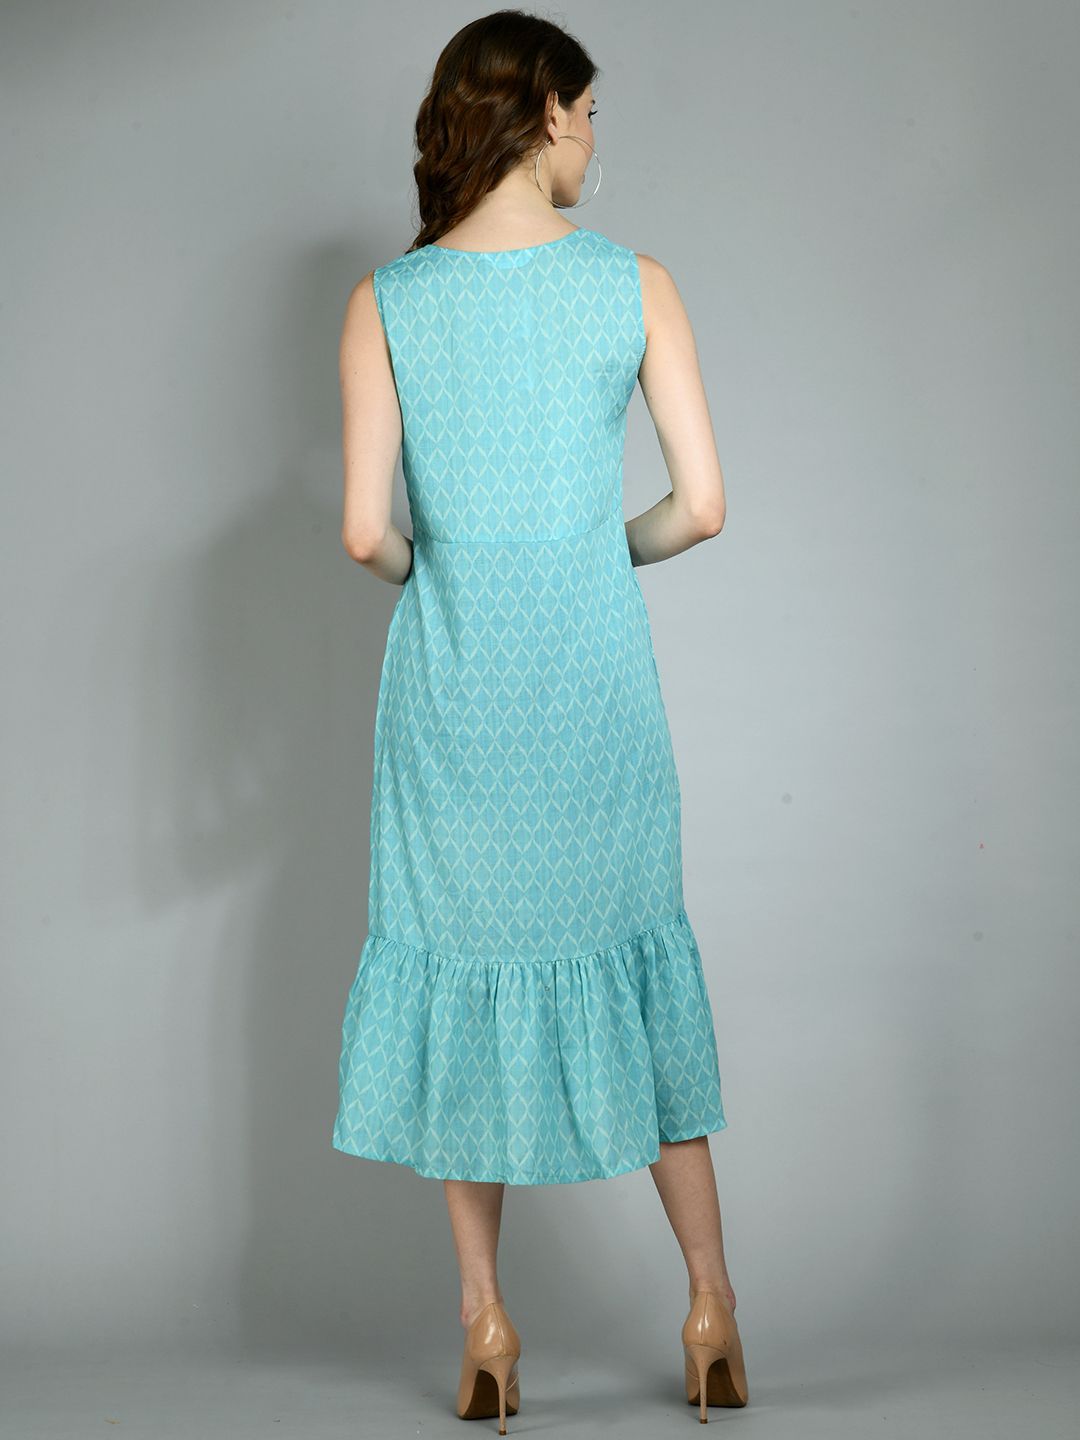 Women's Blue Poly Cotton Printed Sleeveless Round Neck Casual Dress - Myshka